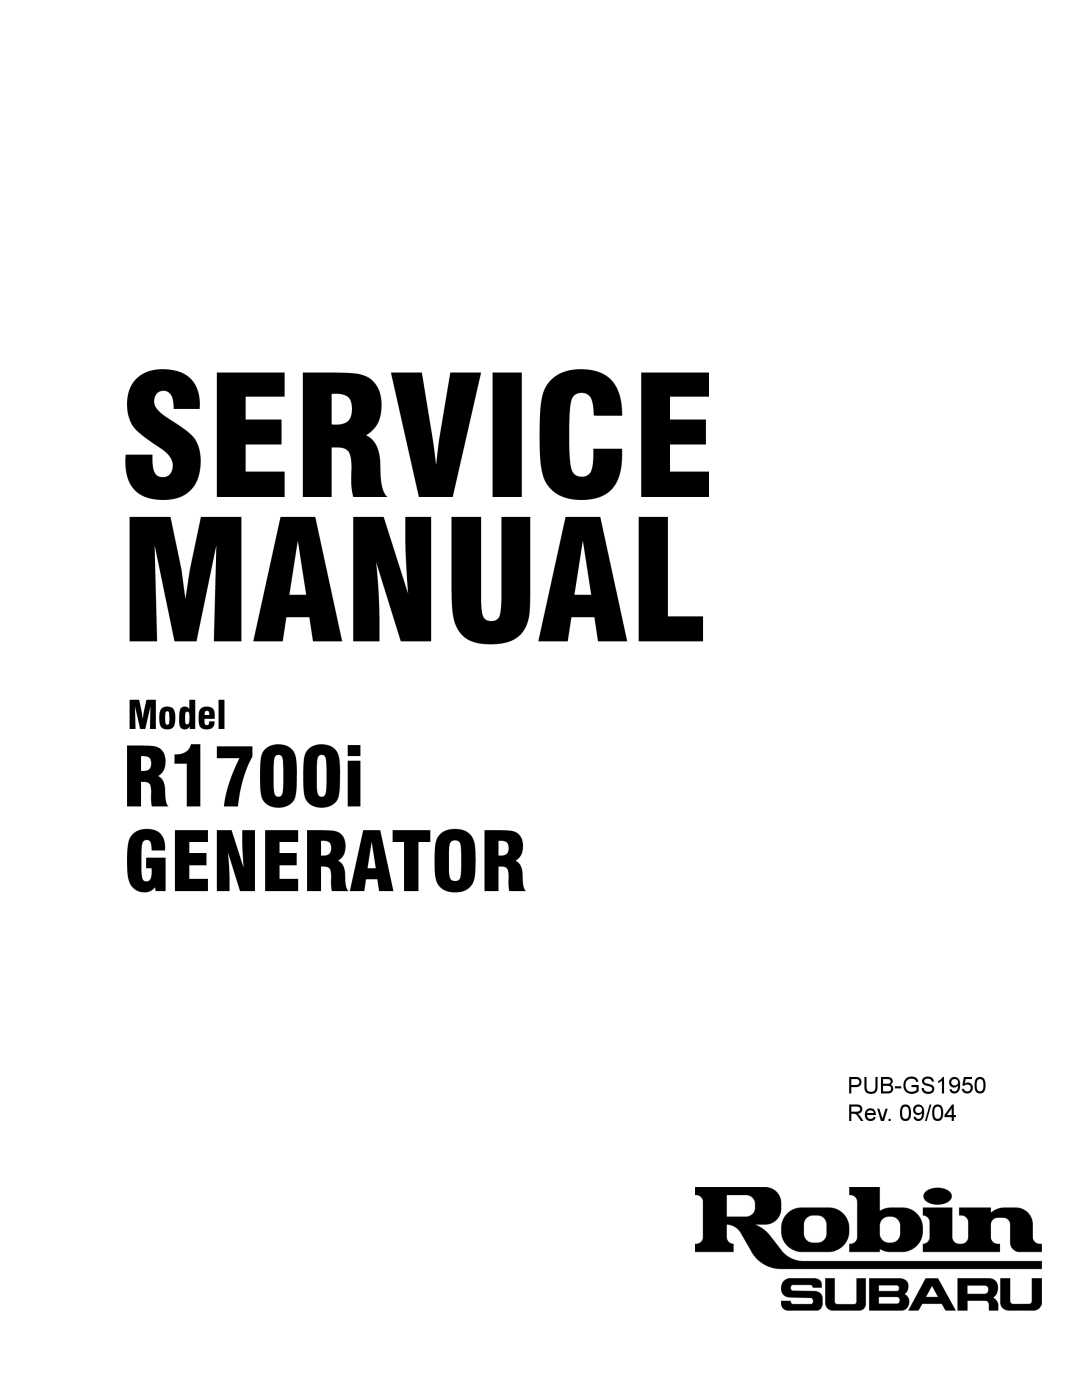 Subaru Robin Power Products service manual R1700i GENERATOR, Model, PUB-GS1950Rev. 09/04 